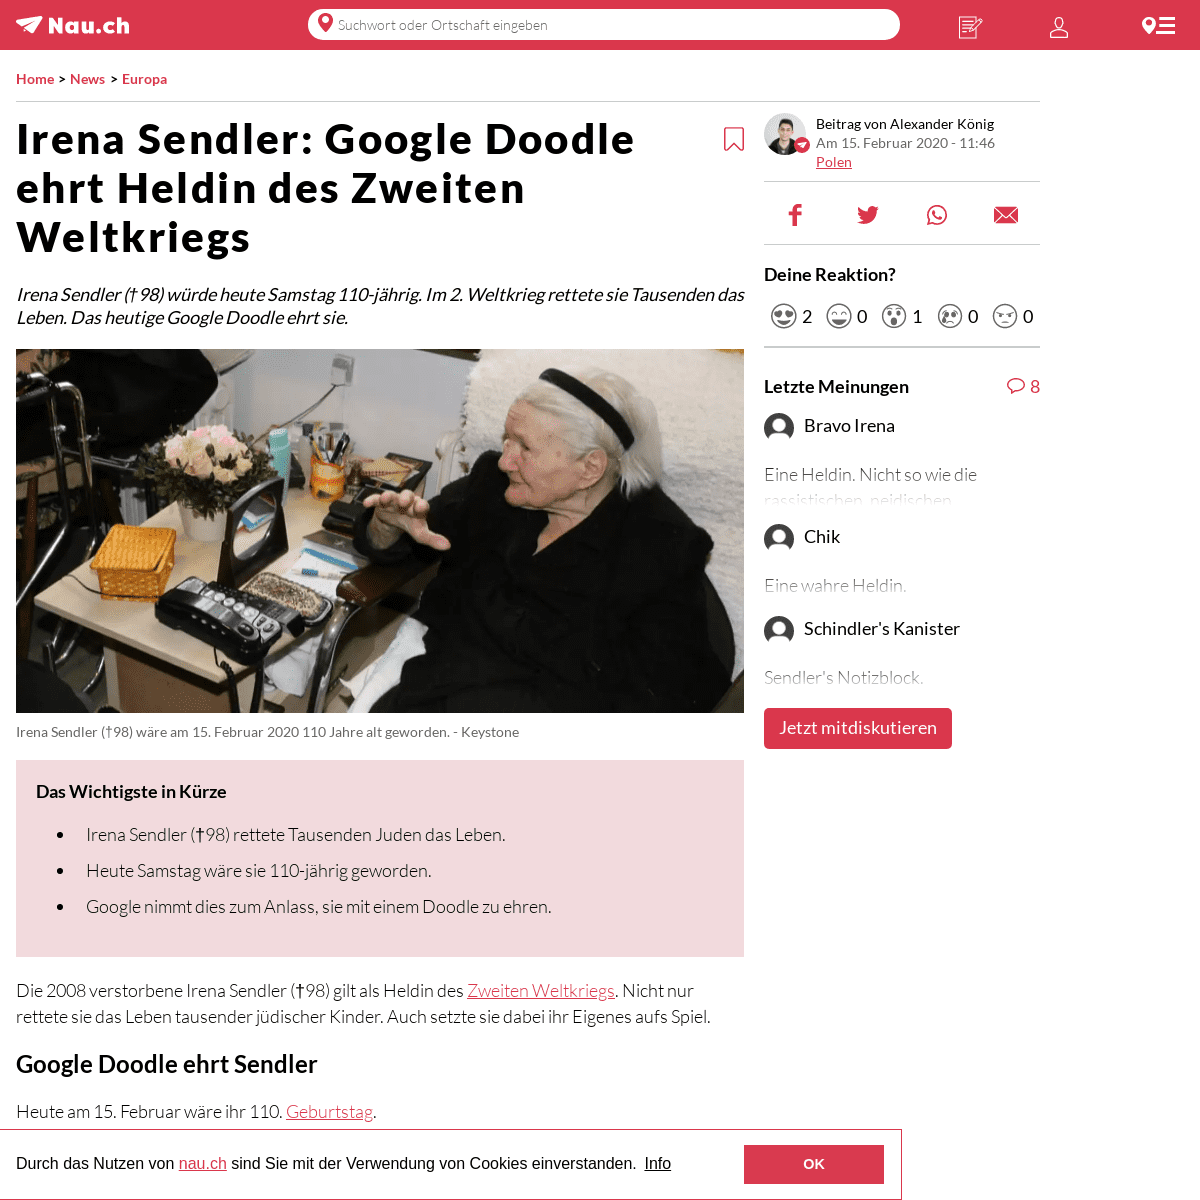 A complete backup of www.nau.ch/news/digital/irena-sendler-google-doodle-ehrt-heldin-des-zweiten-weltkriegs-65662903